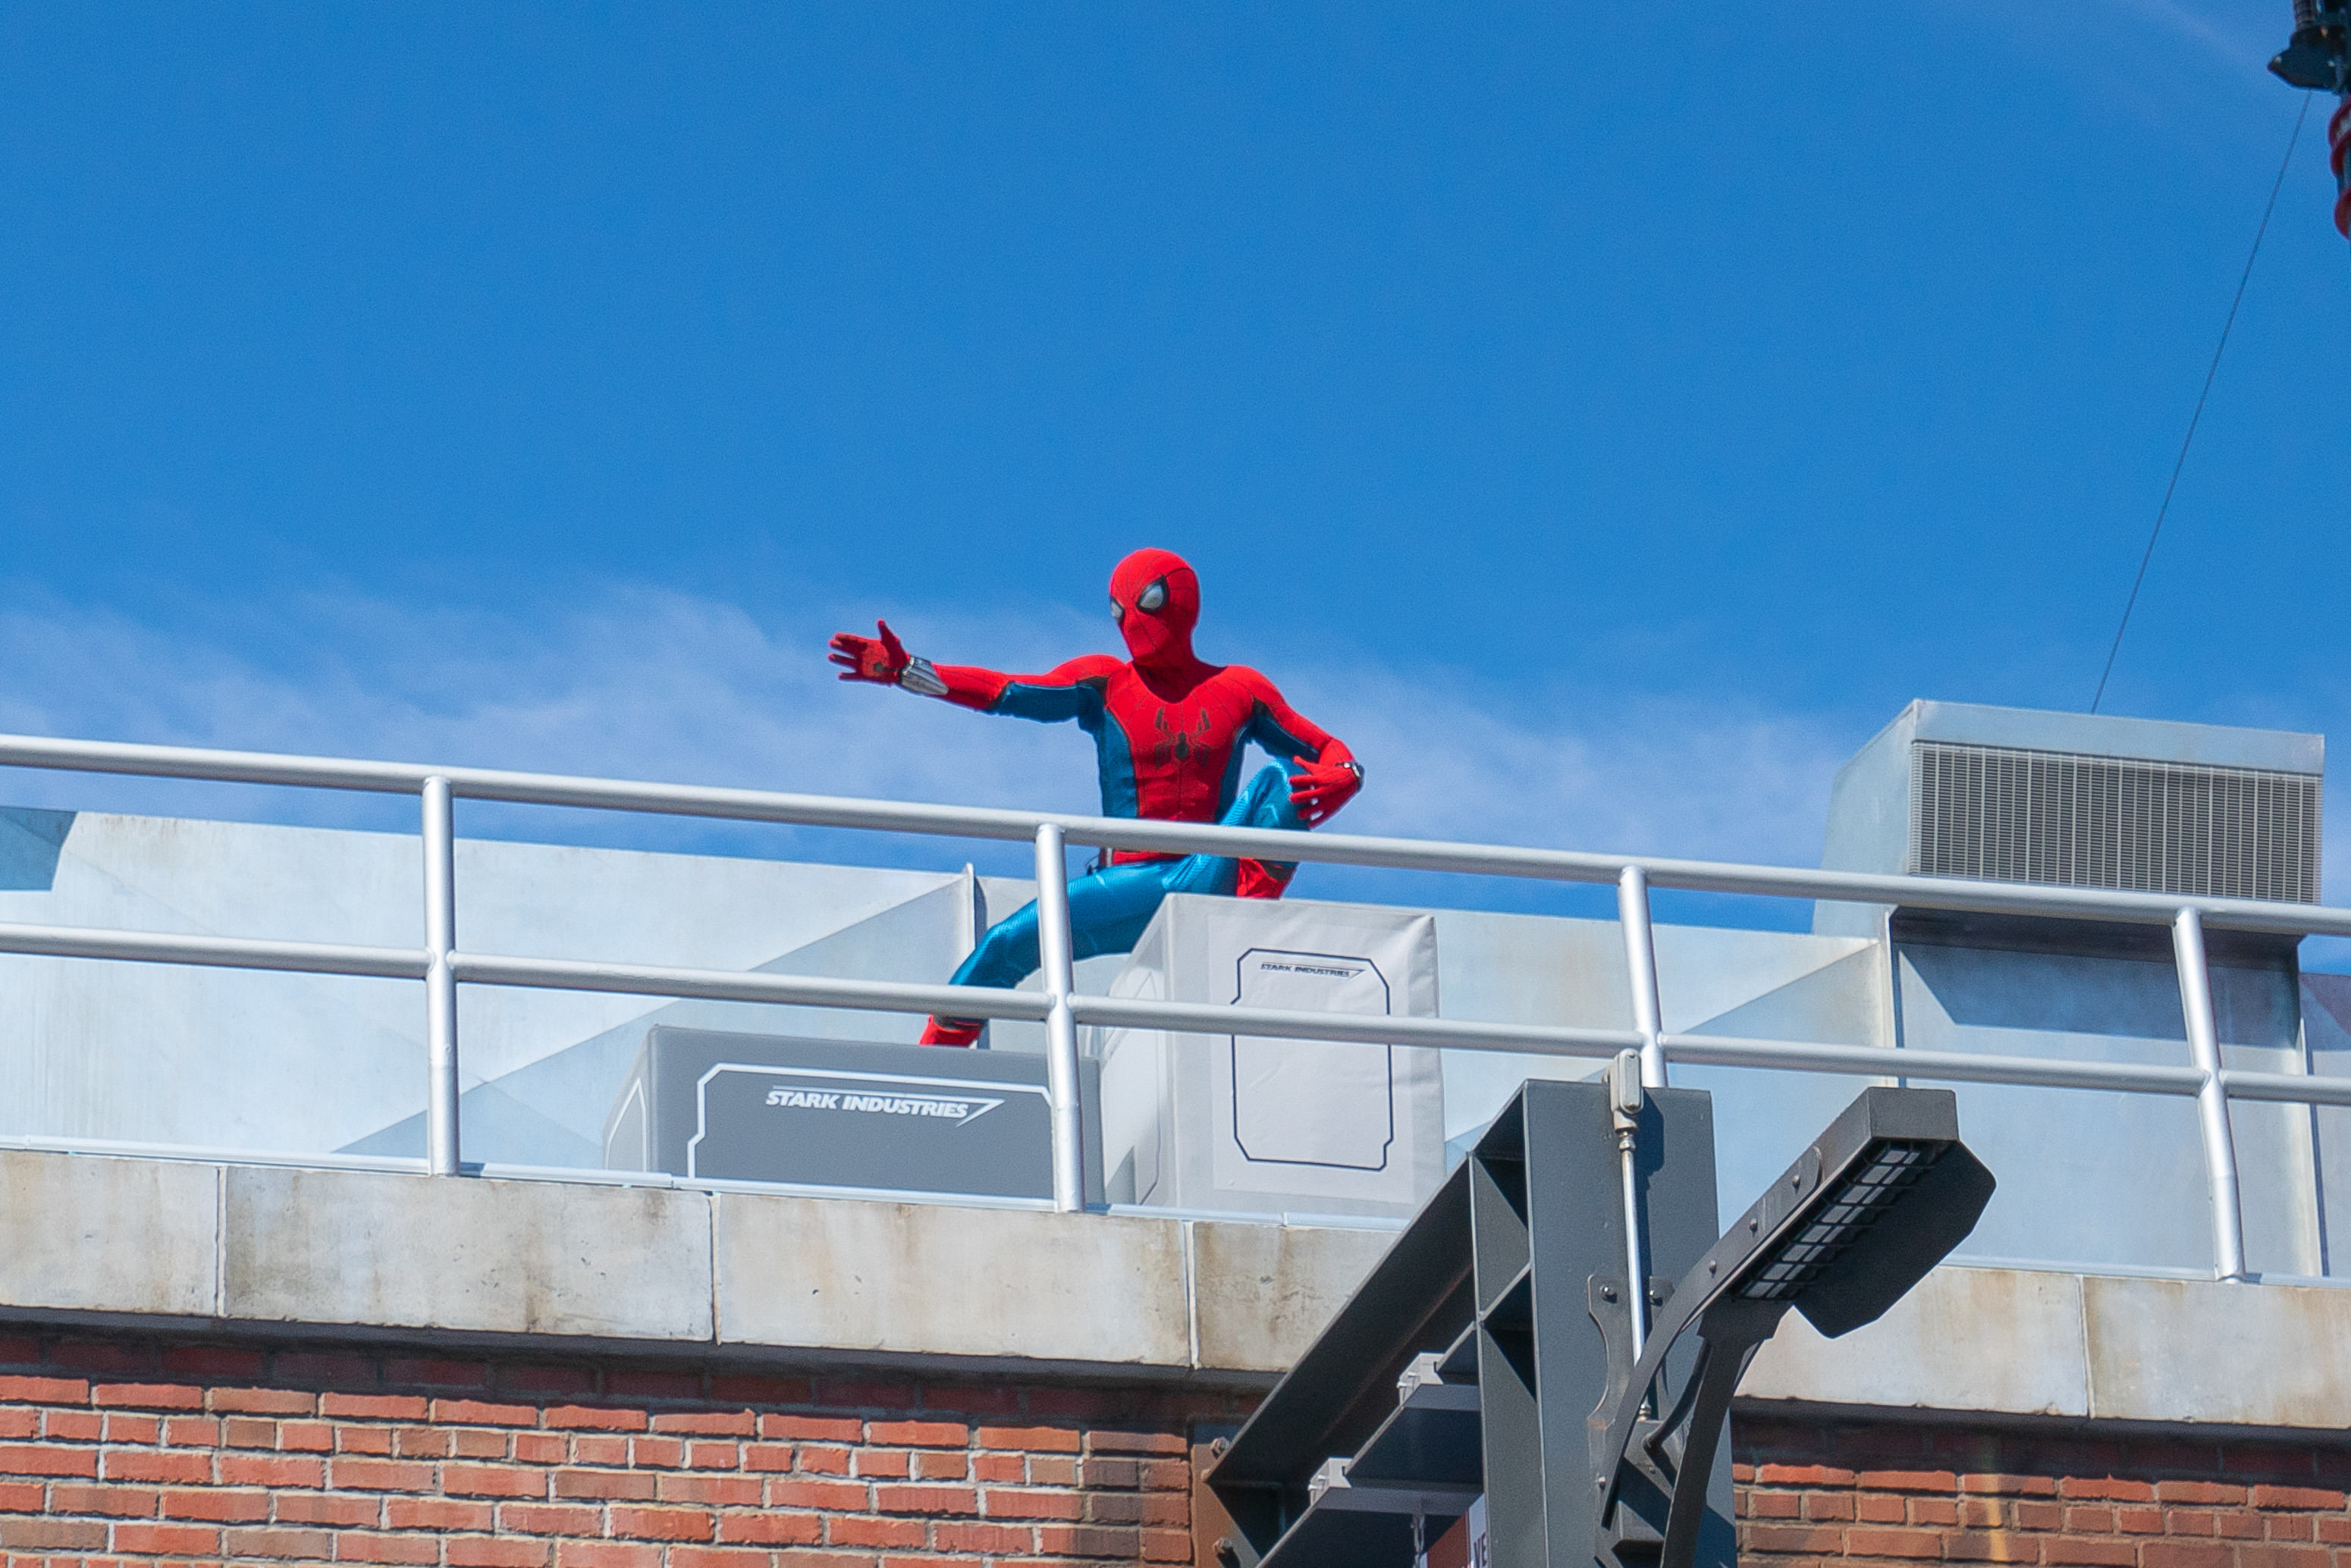 Disneyland's Spider-Man Stunt Fails in Front of Crowd in Viral Video